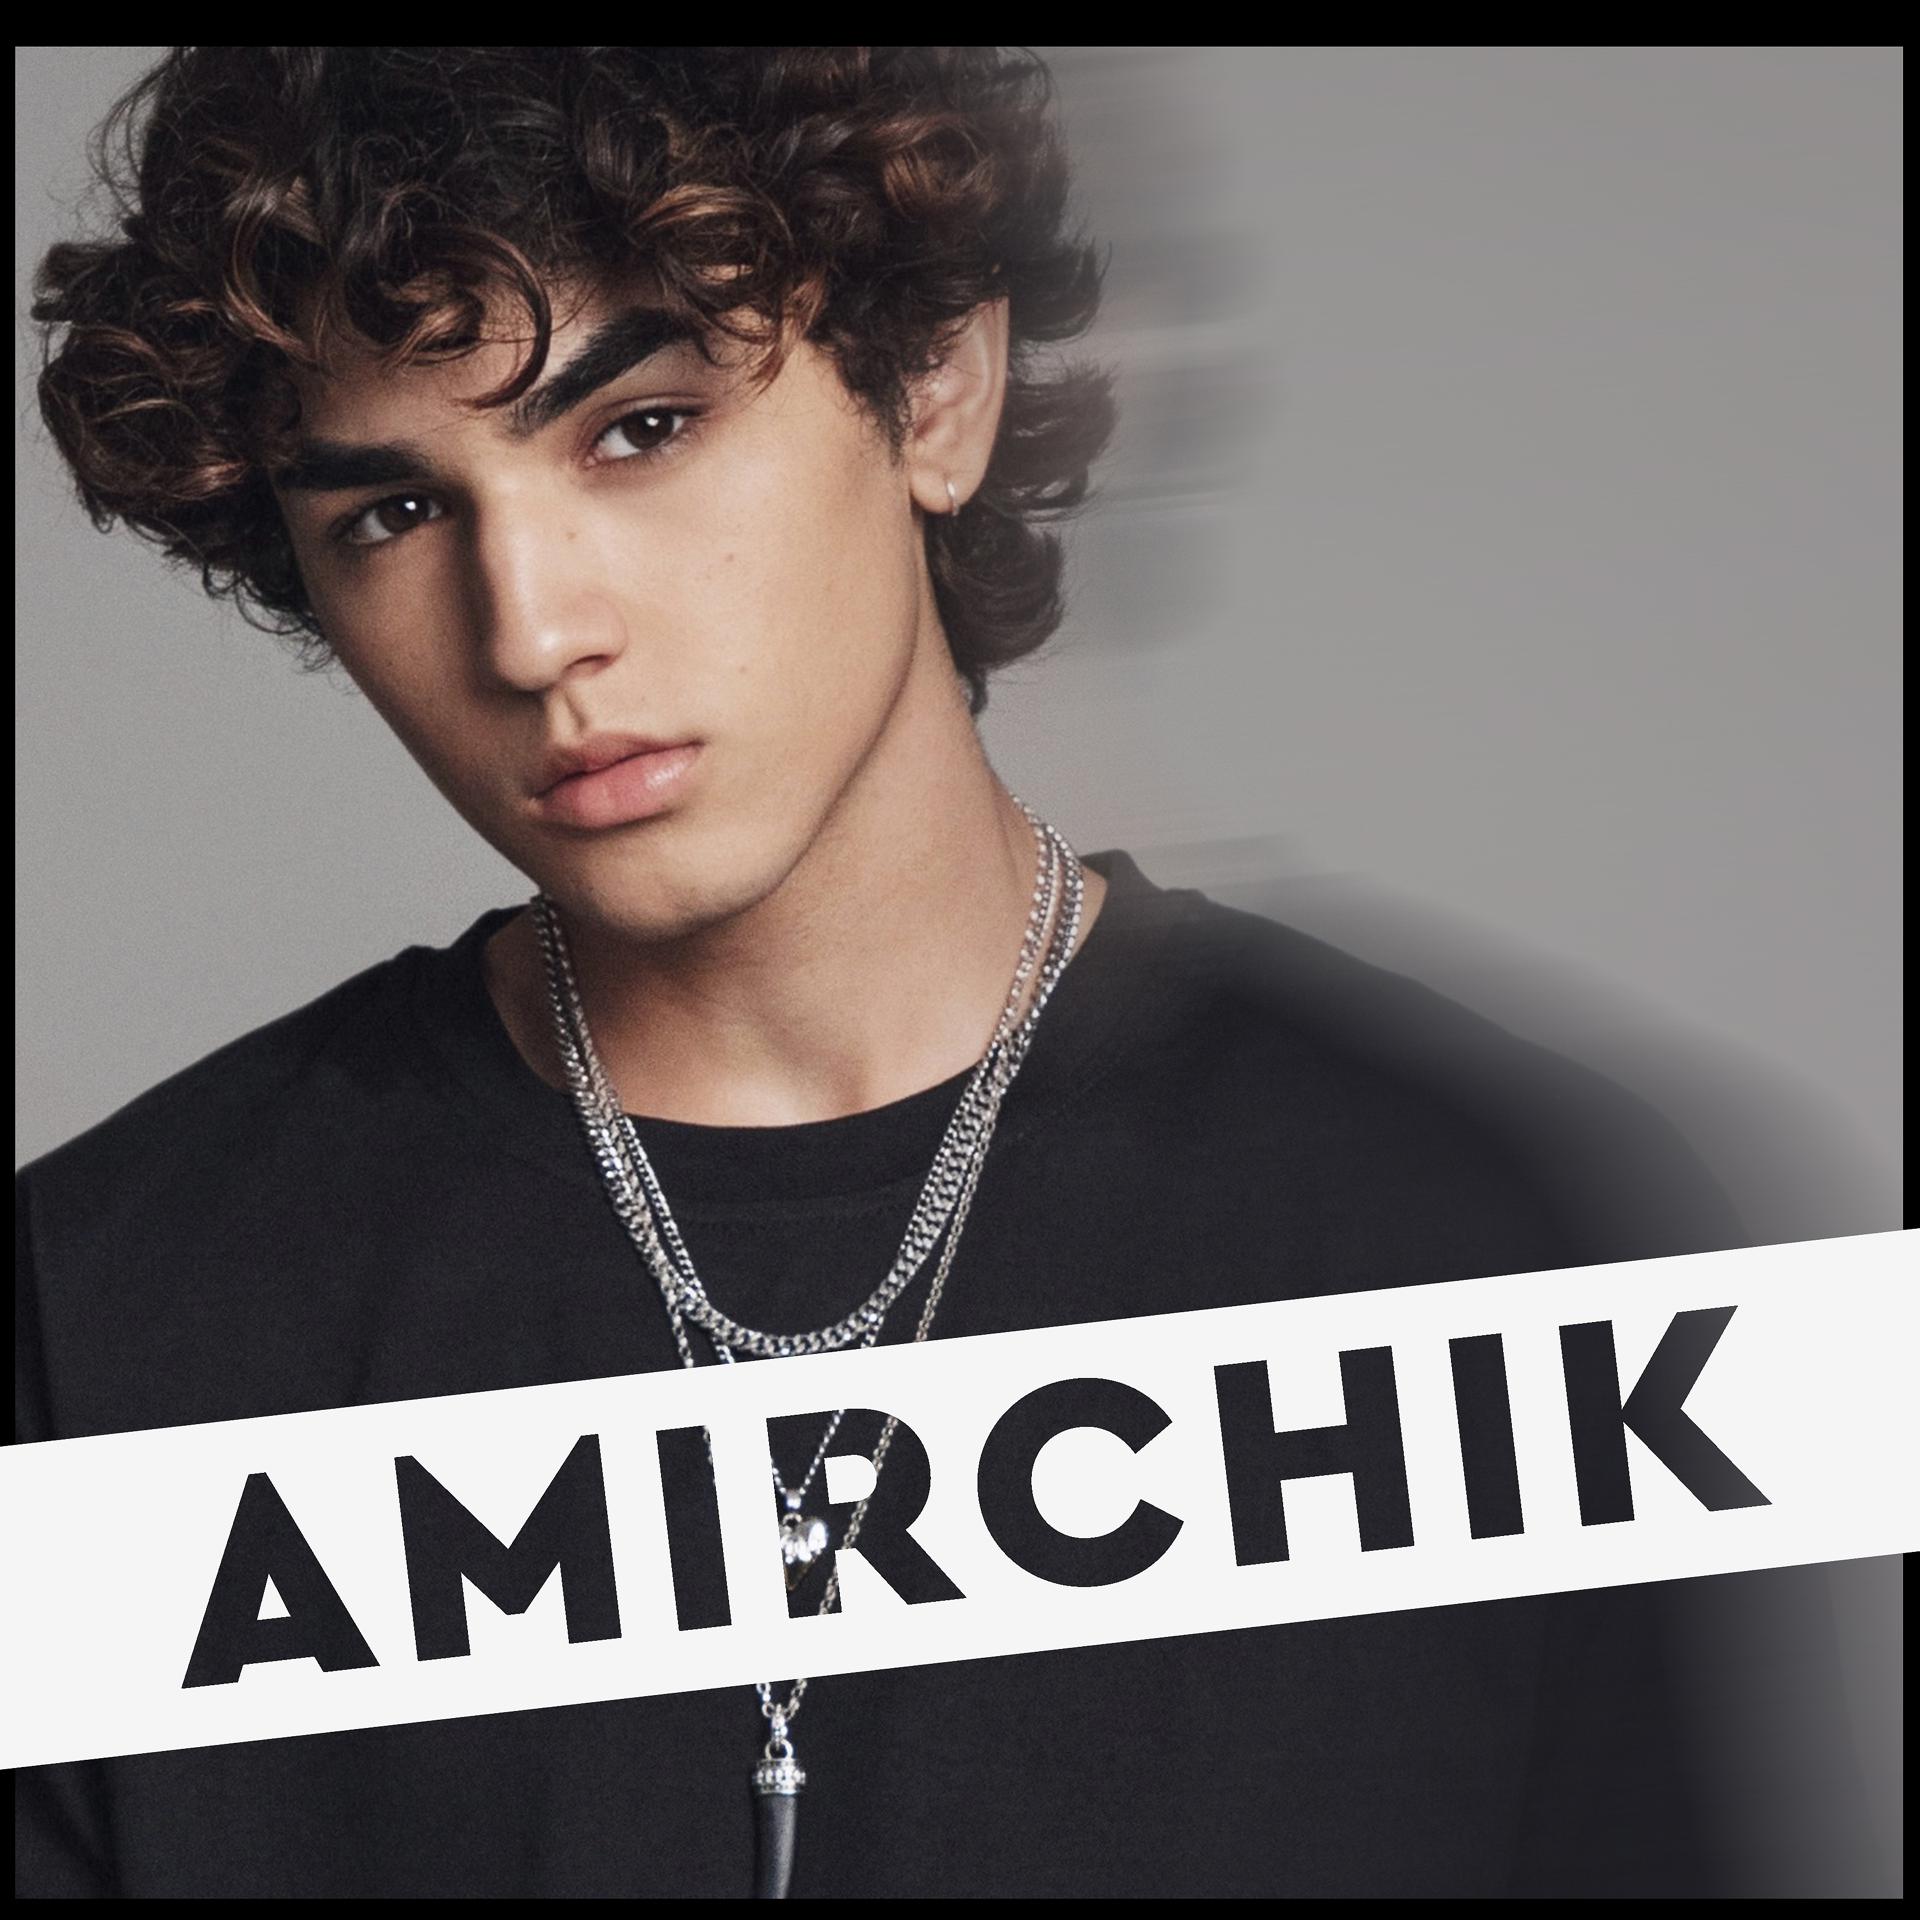 Amirchik - На твоих губах